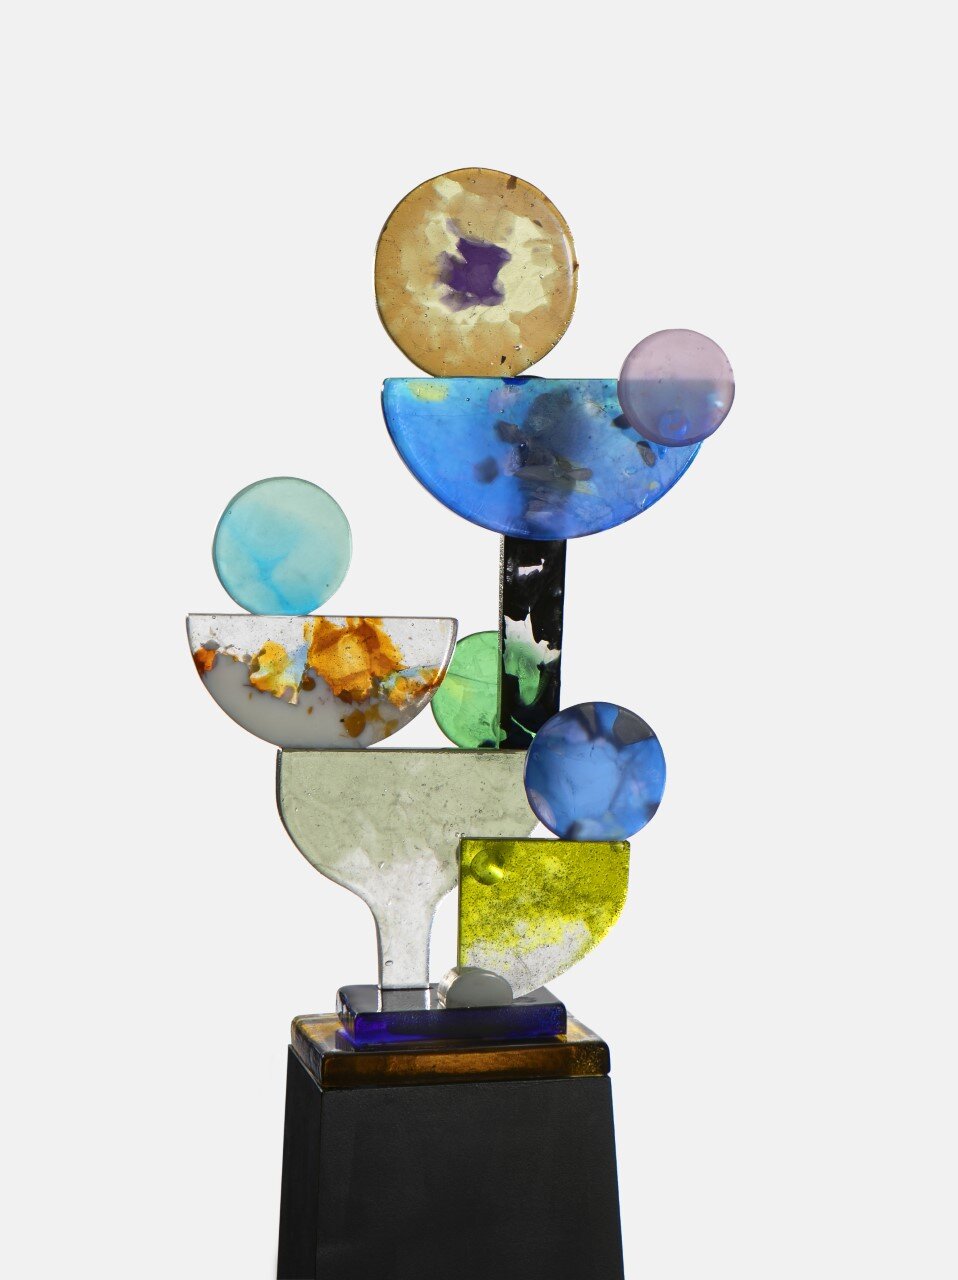 Christian Achenbach, "Lido", 63x40x15cm, Kristallglas 